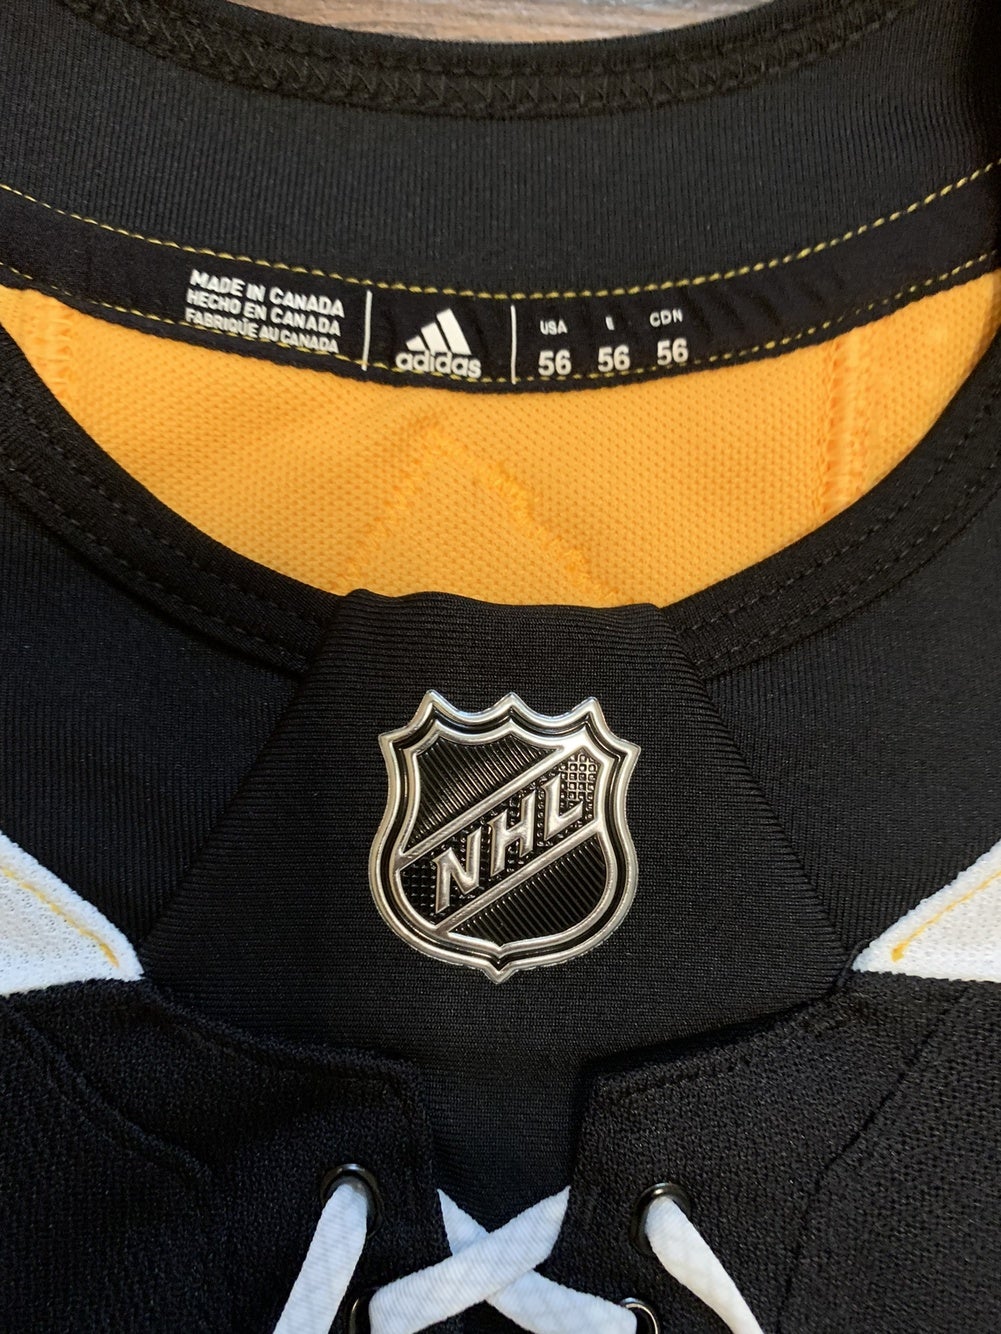 SOLD) Boston Bruins MIC Adidas Practice Jerseys with Sponsor